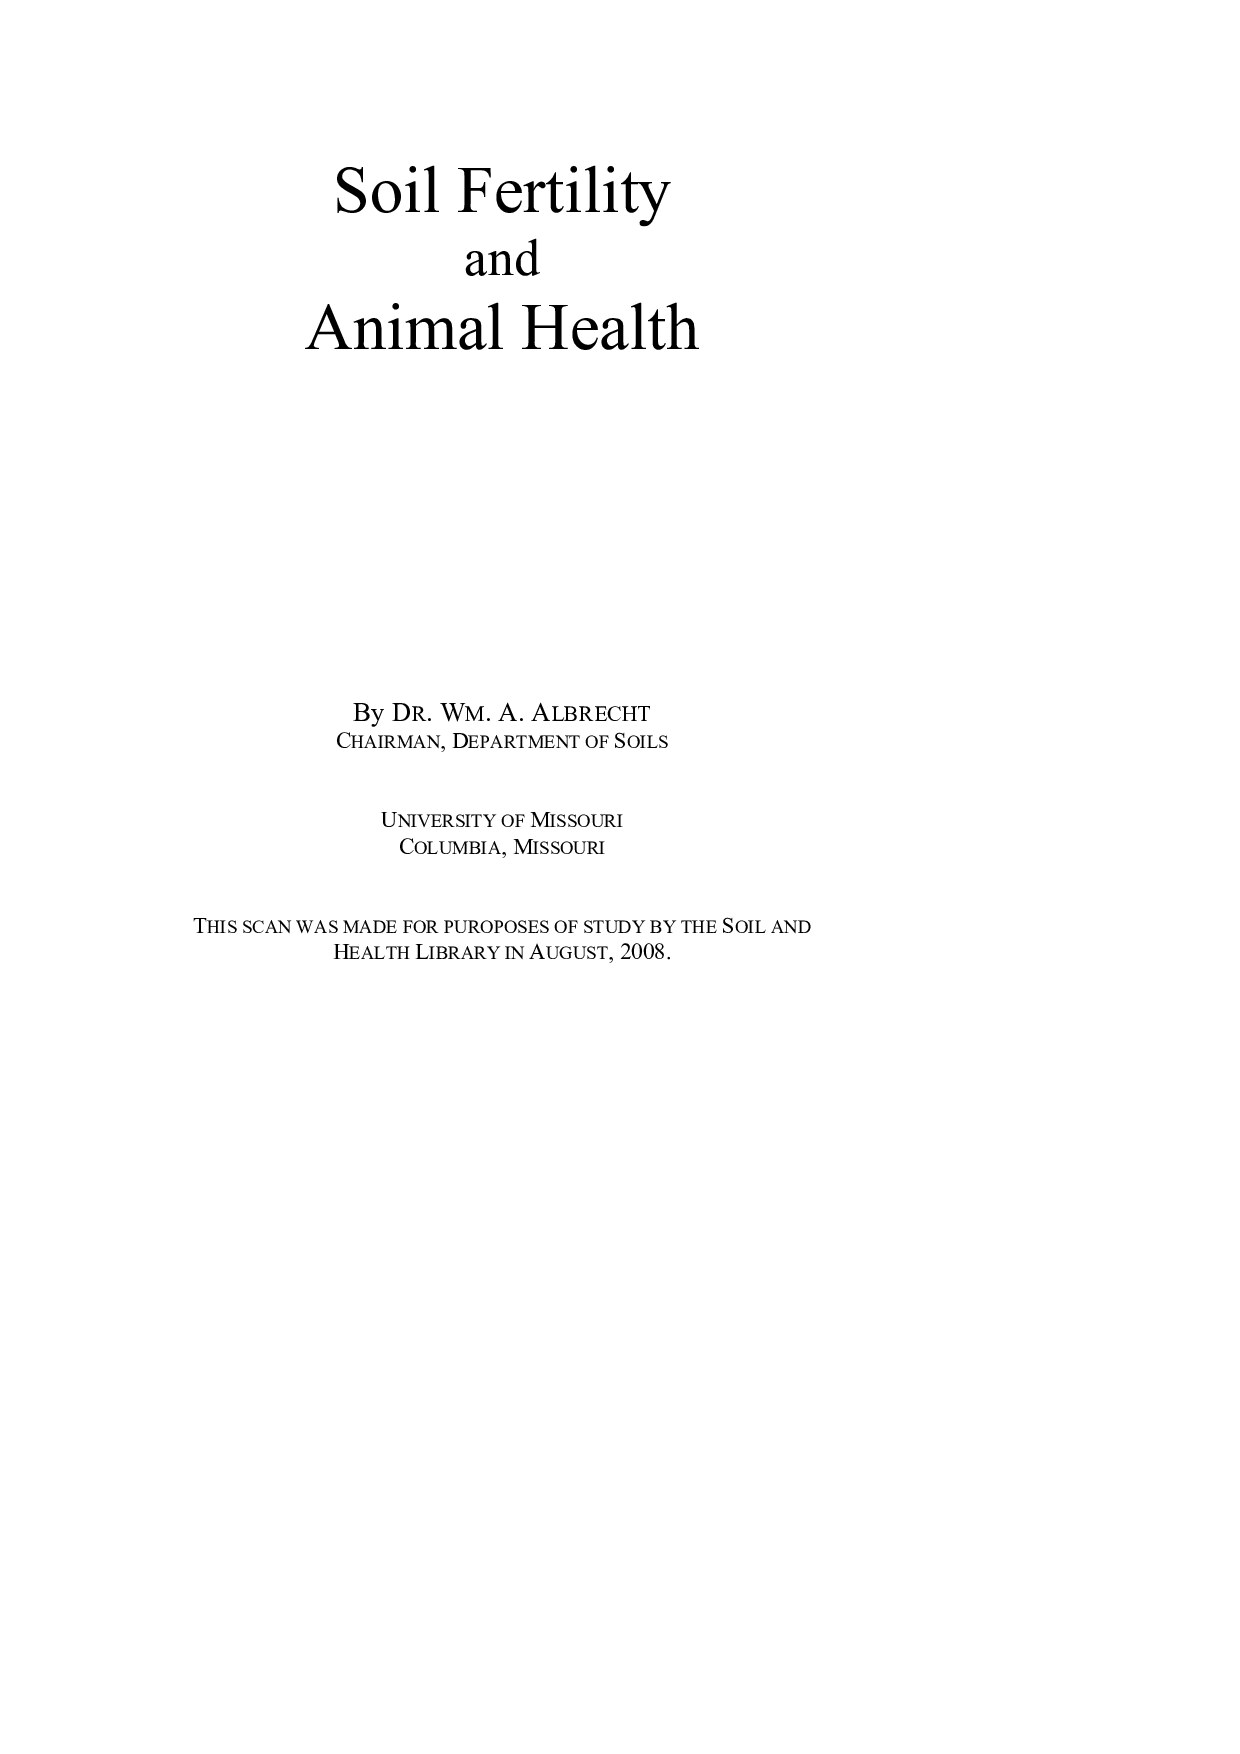 Microsoft Word - 010141.animalhealth.doc